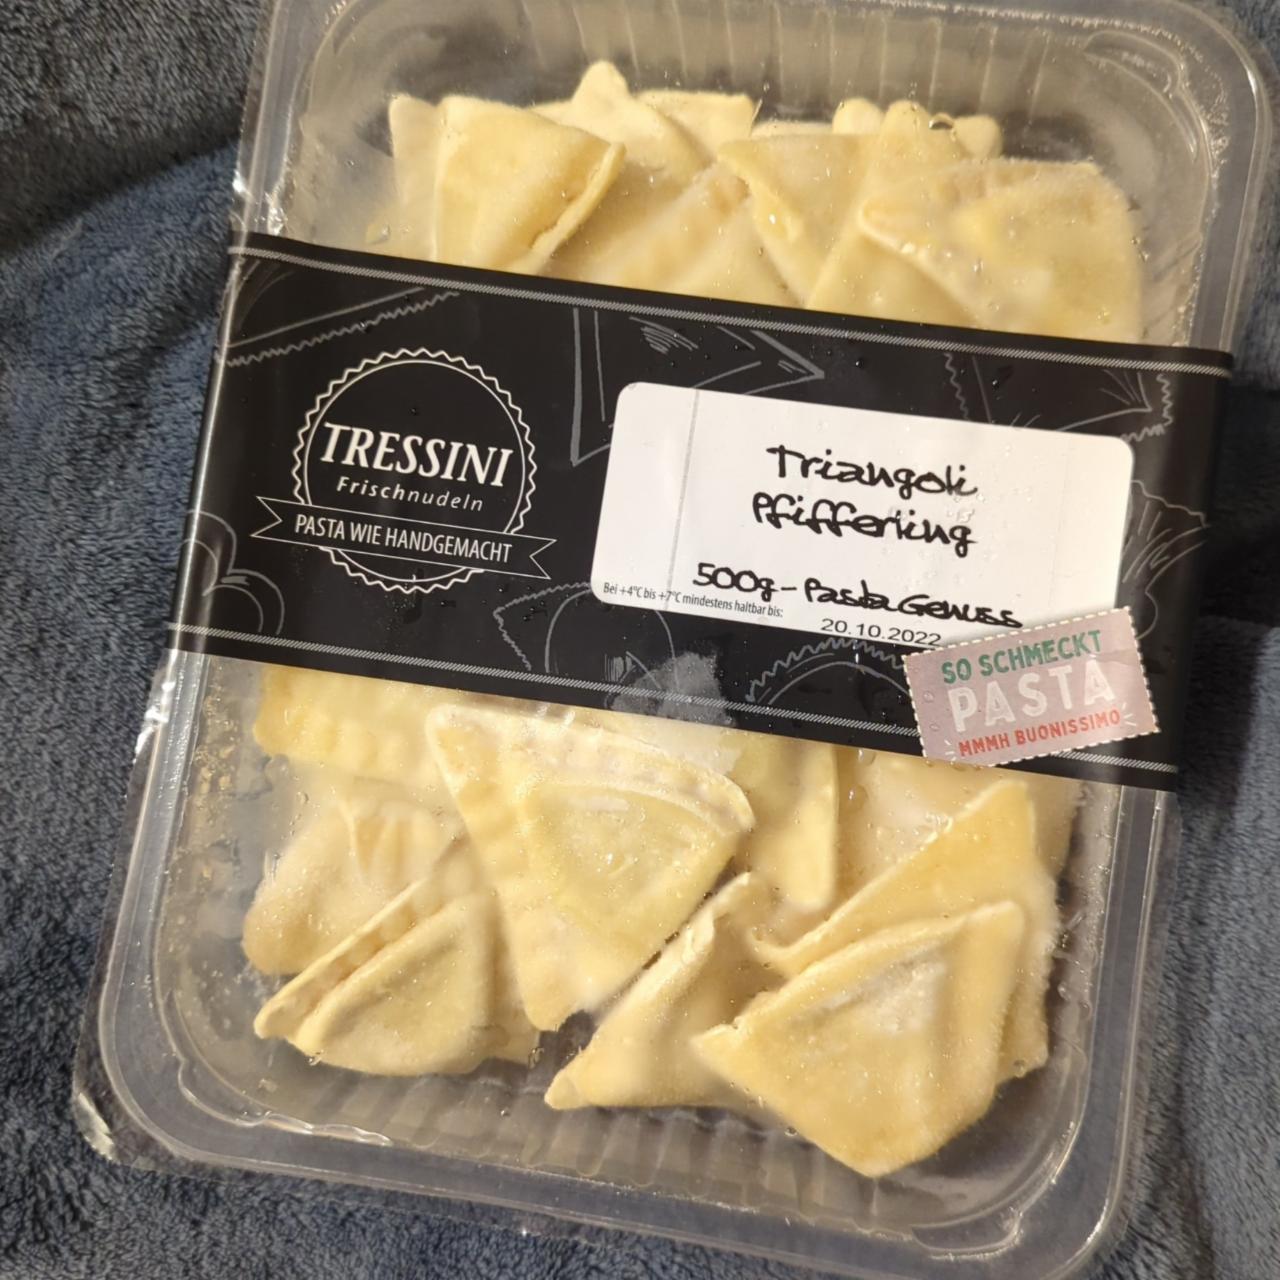 Фото - трианголи с начинкой Triangoli pfifferling Pasta Genuss Tressini